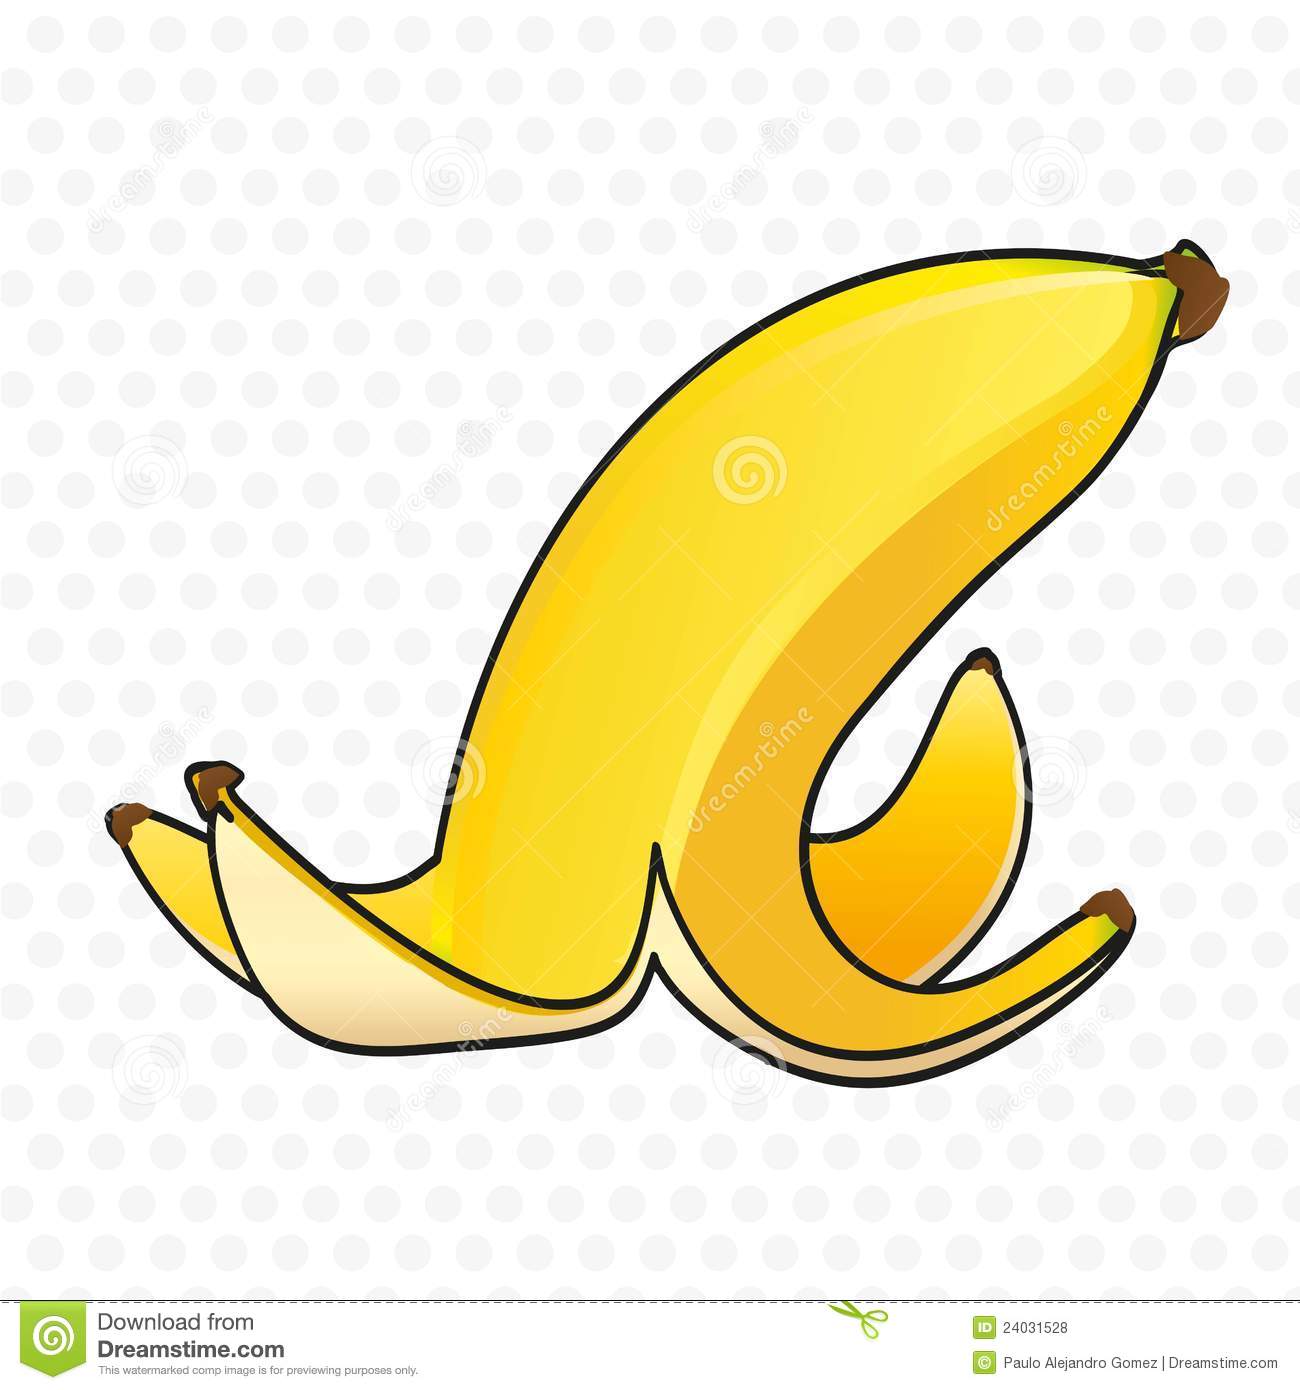 Banana Peel Royalty Free Stock Photos   Image  24031528